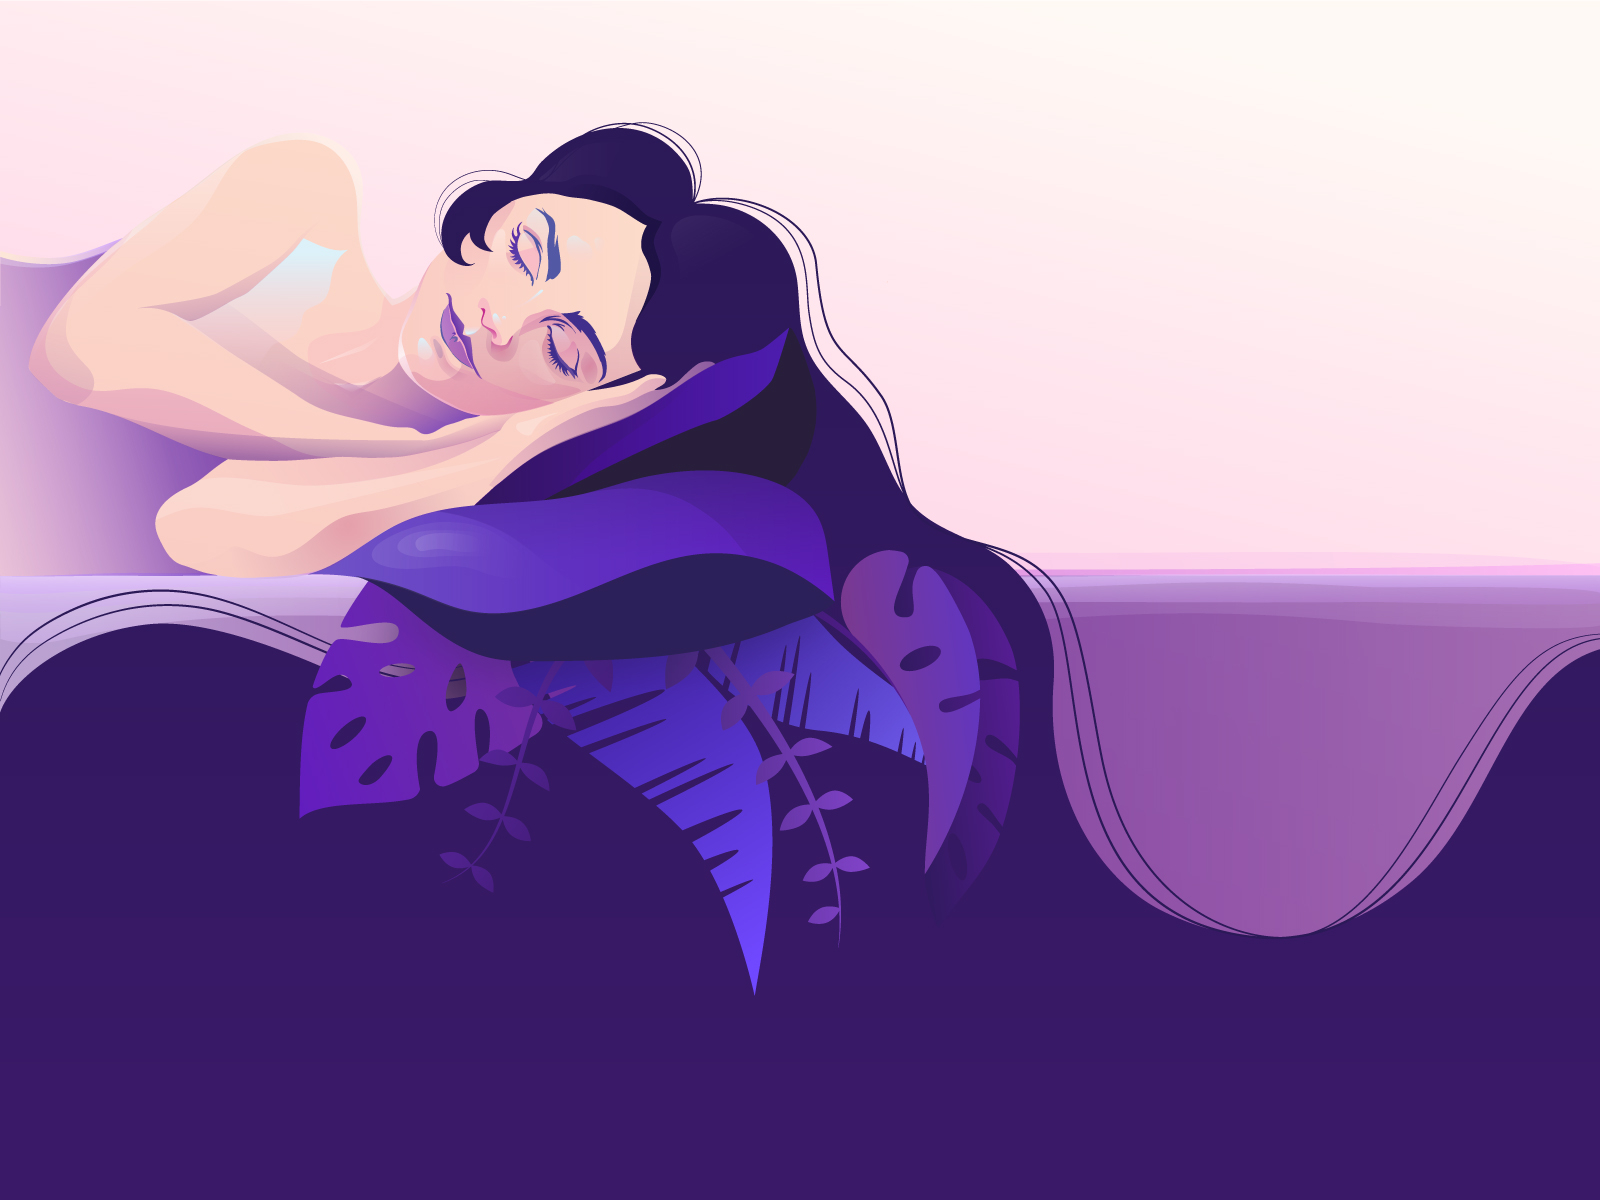 Sleeping & Dreaming Illustration by Weronika Ostrowska for LikiMS